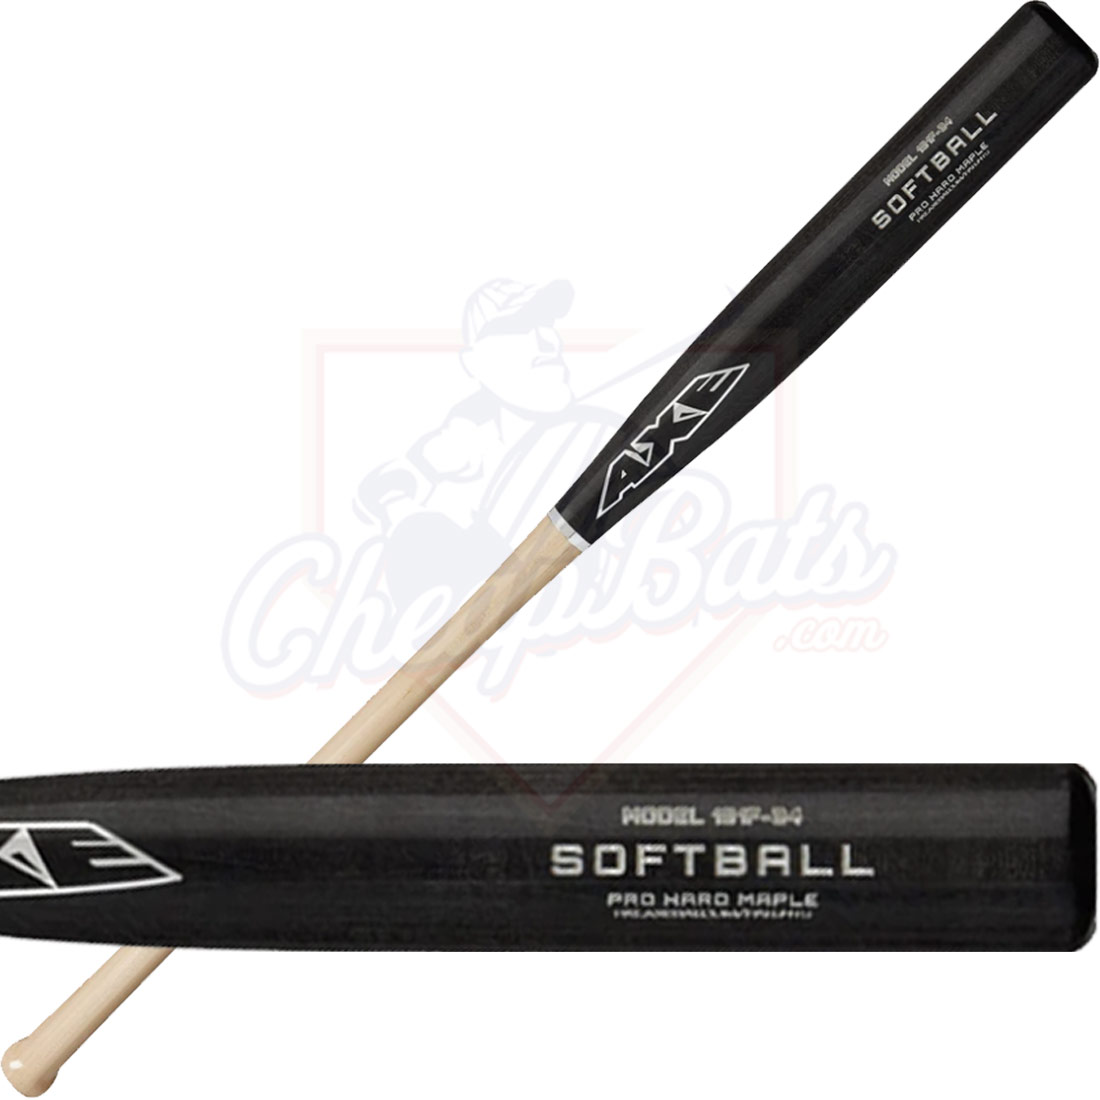 Axe Pro Hard Maple Wood Slowpitch Softball Bat L191F